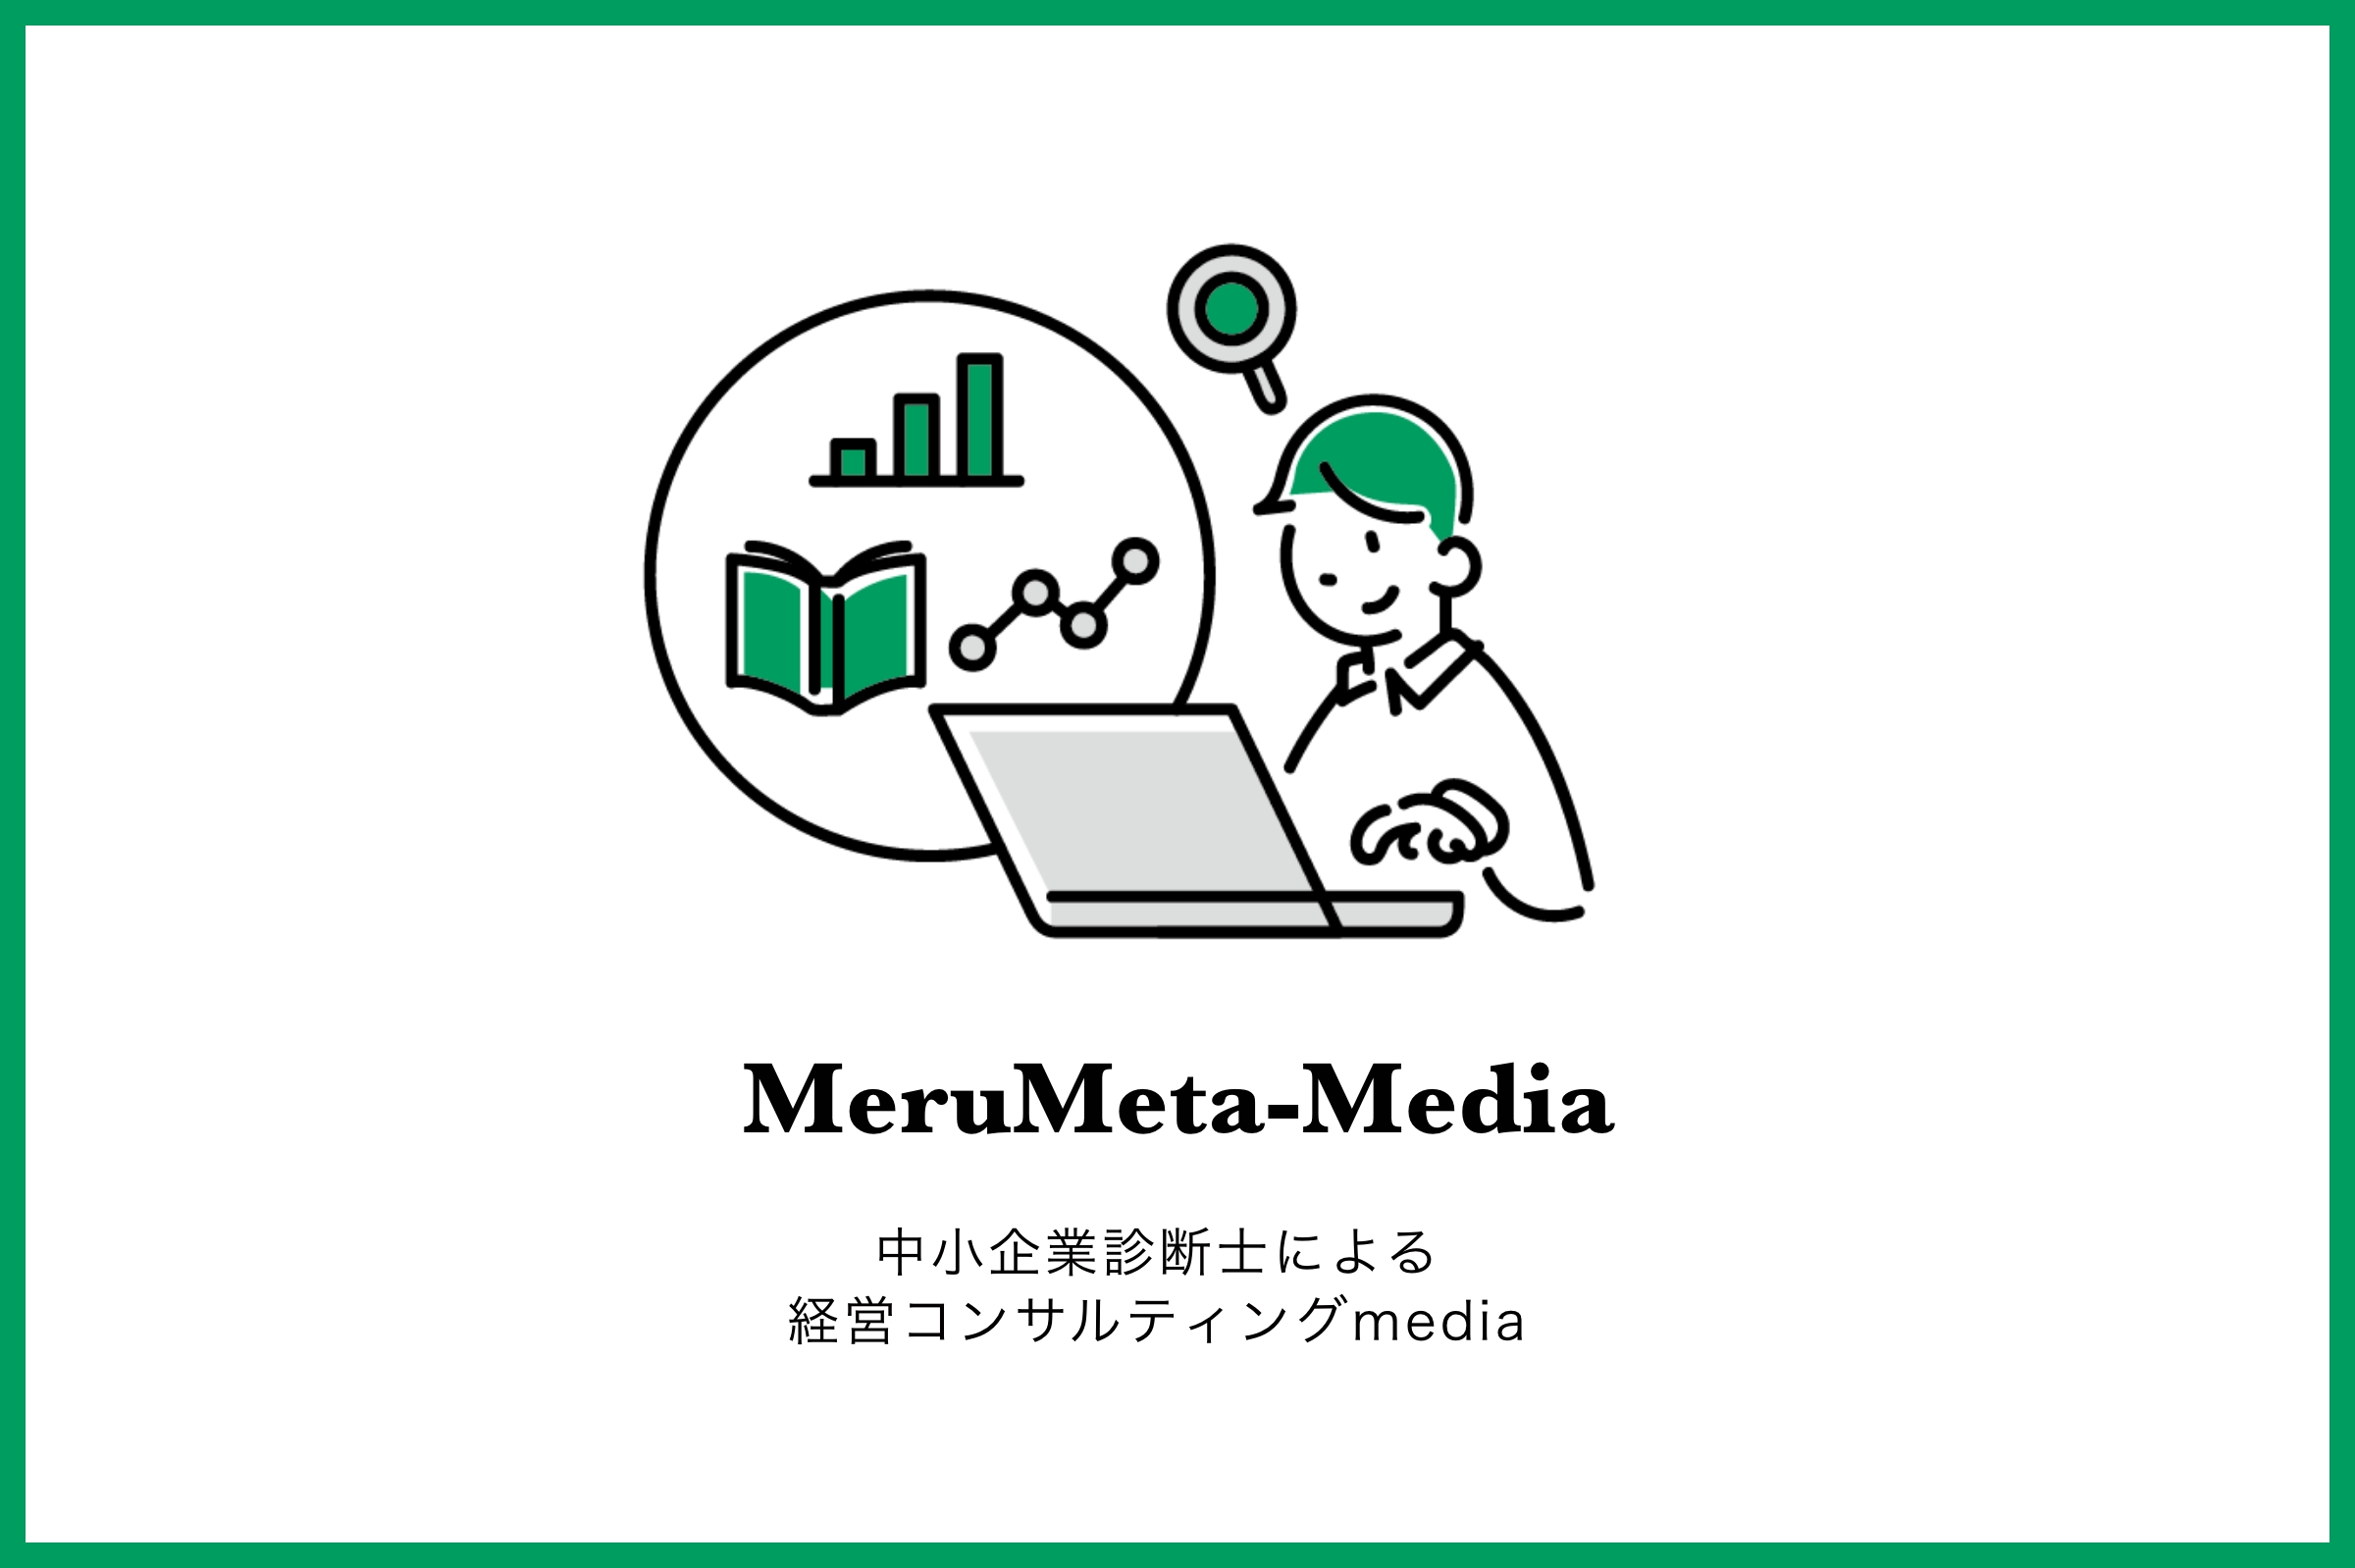 MeruMeta-Mediaは中小企業診断士による経営コンサルティングmedia